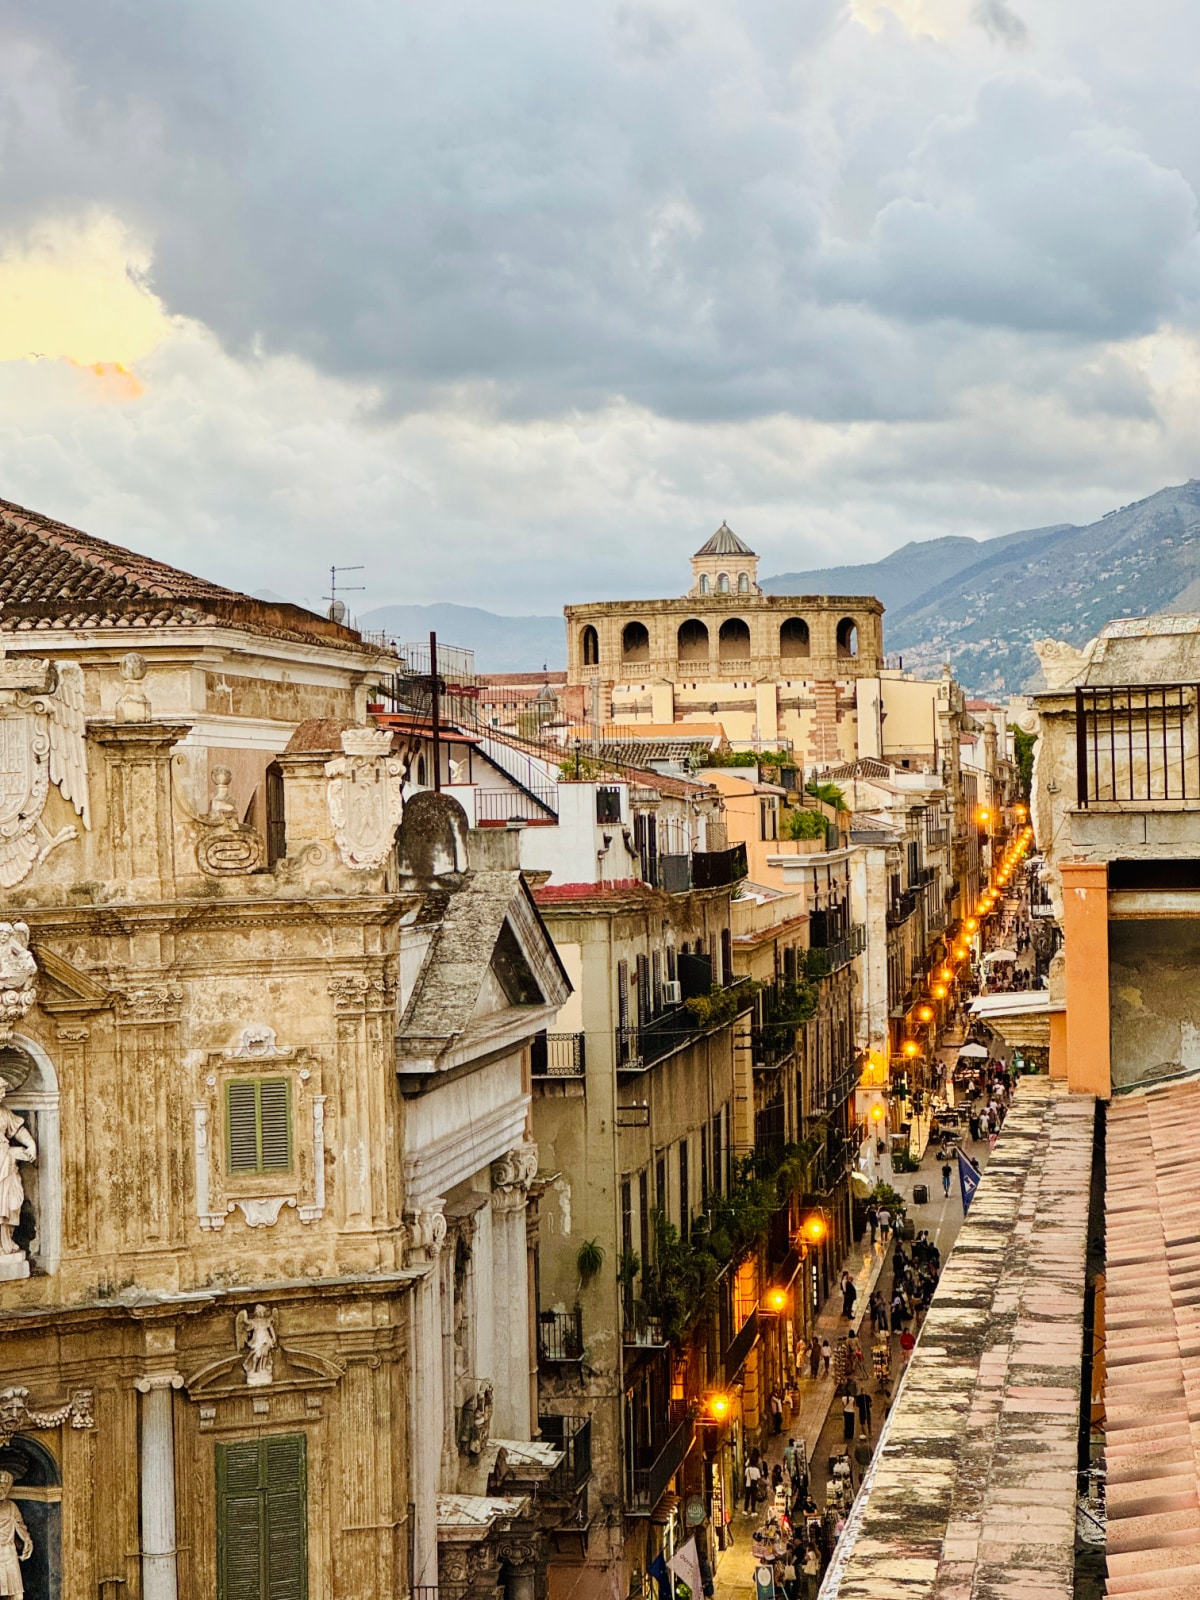 City of Palermo from balcony.